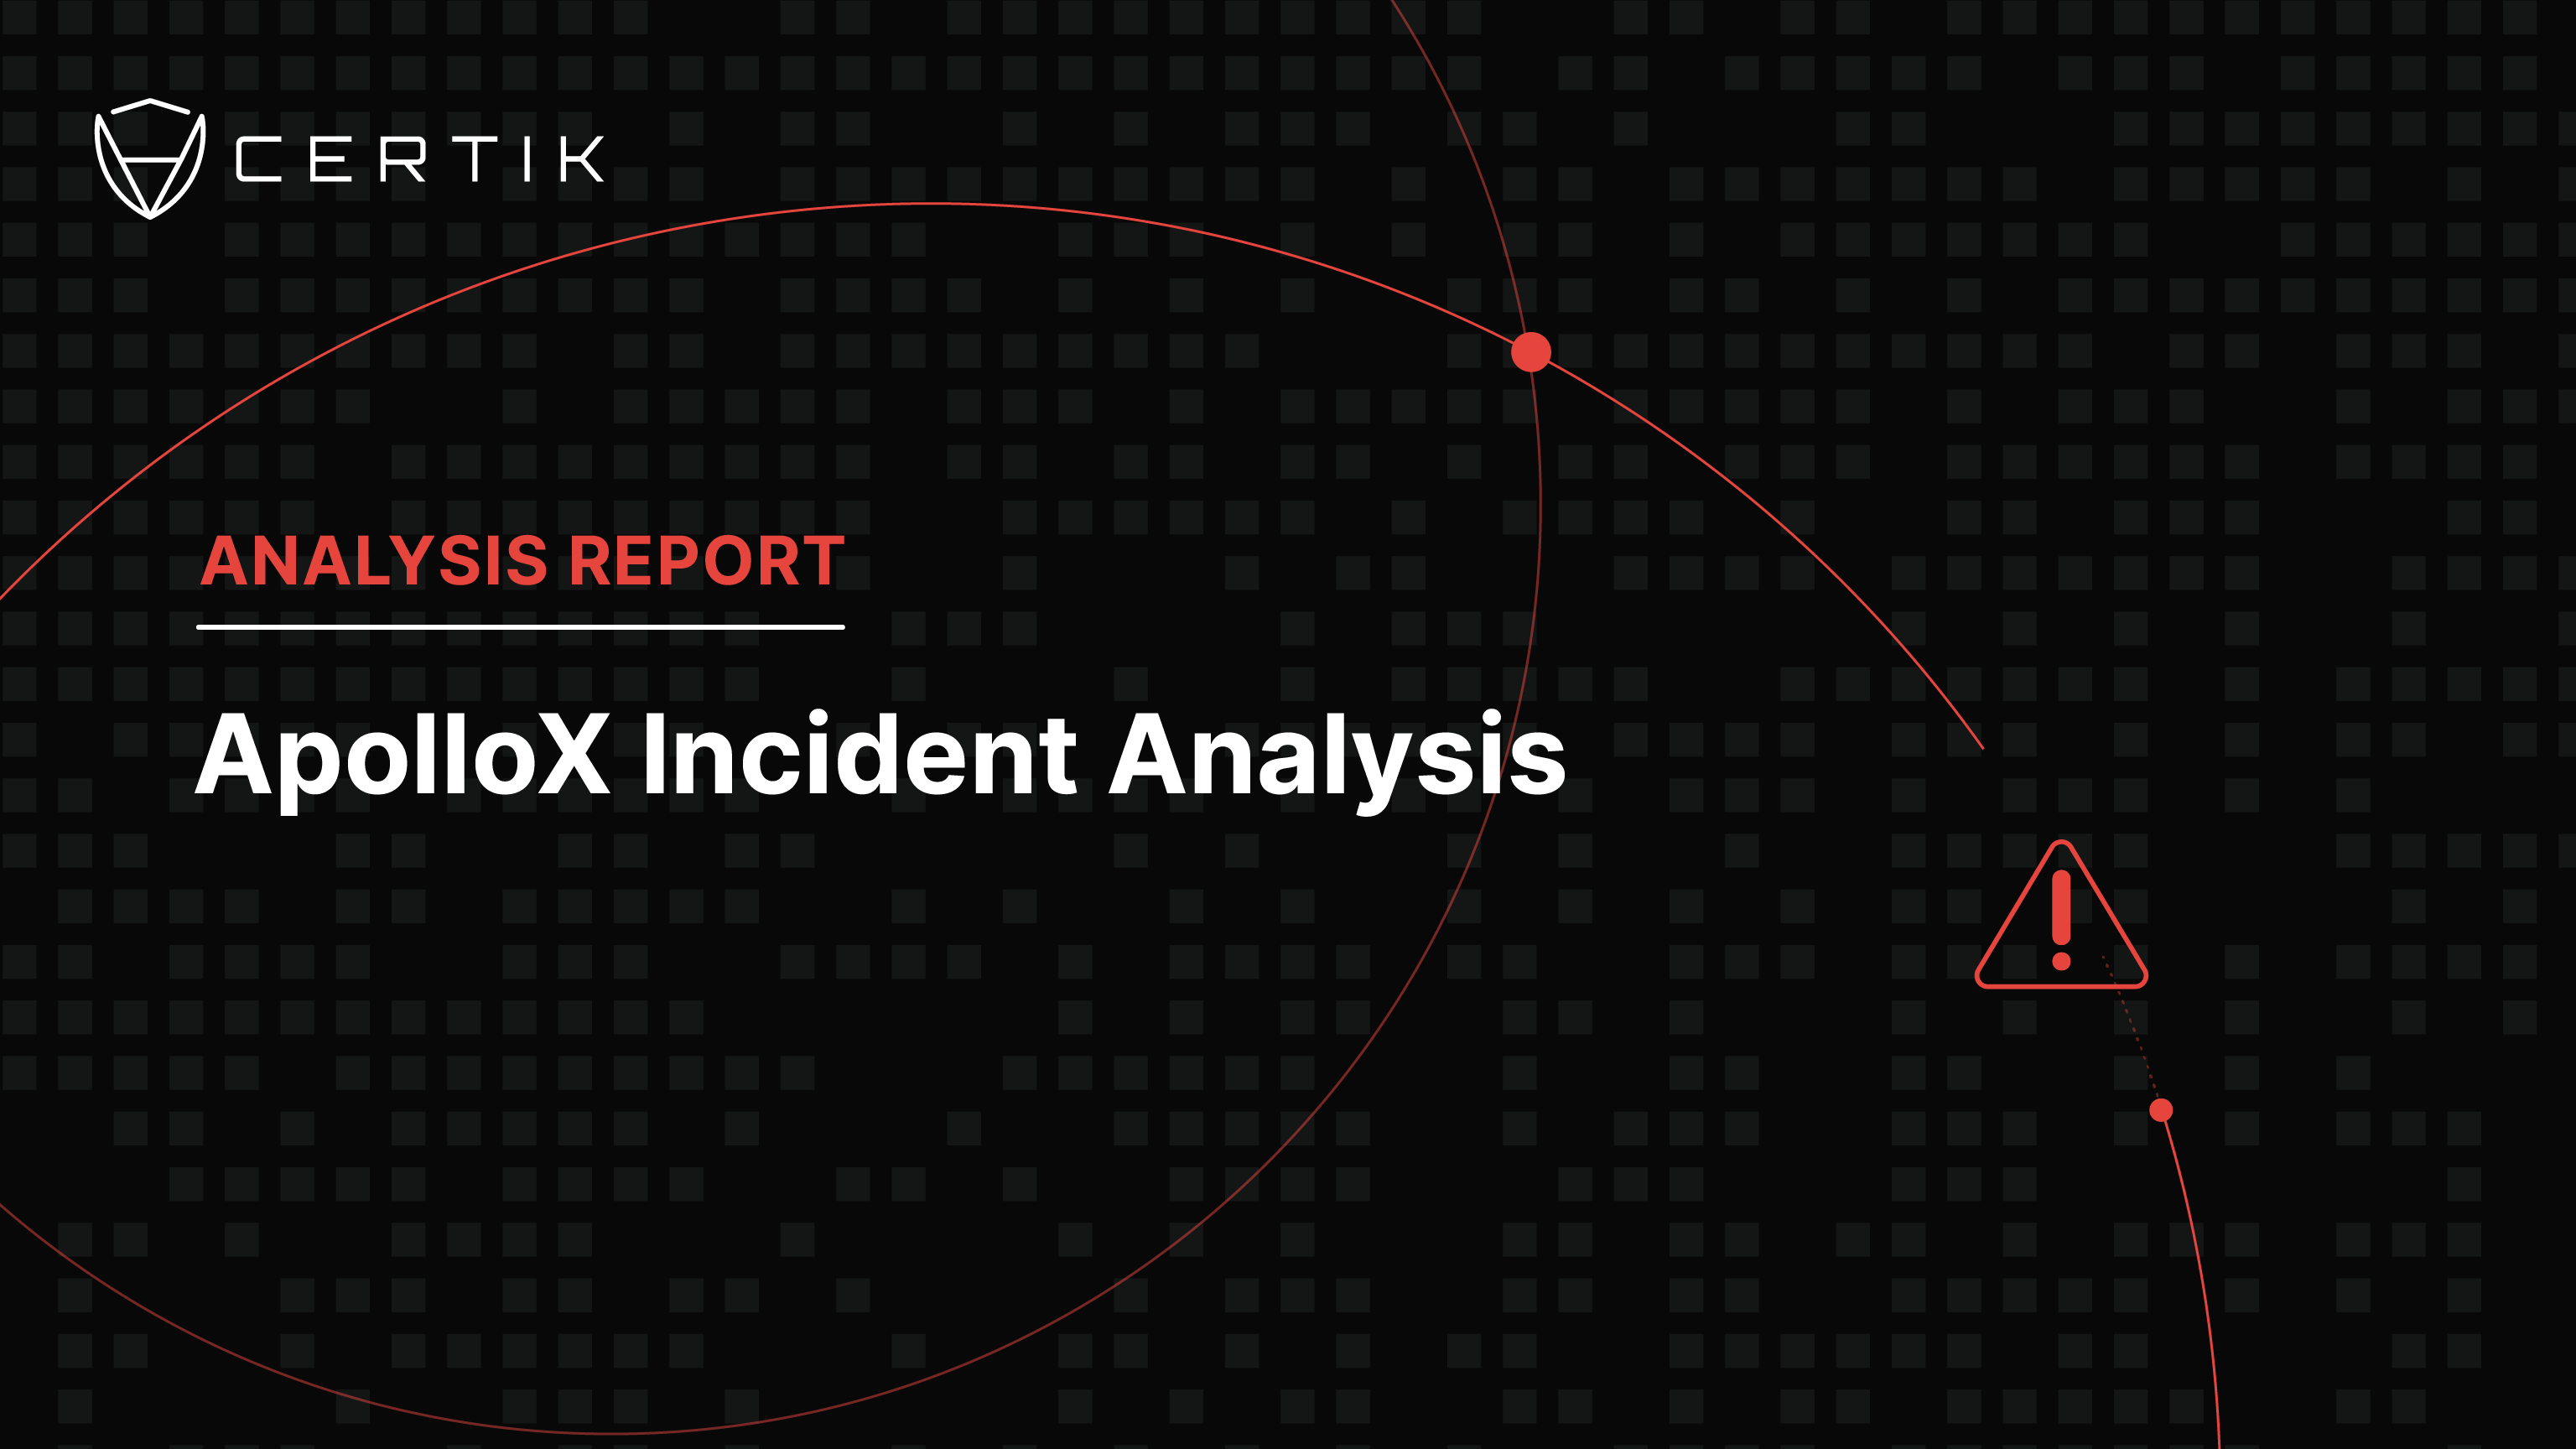 Apollo X Incident Analysis